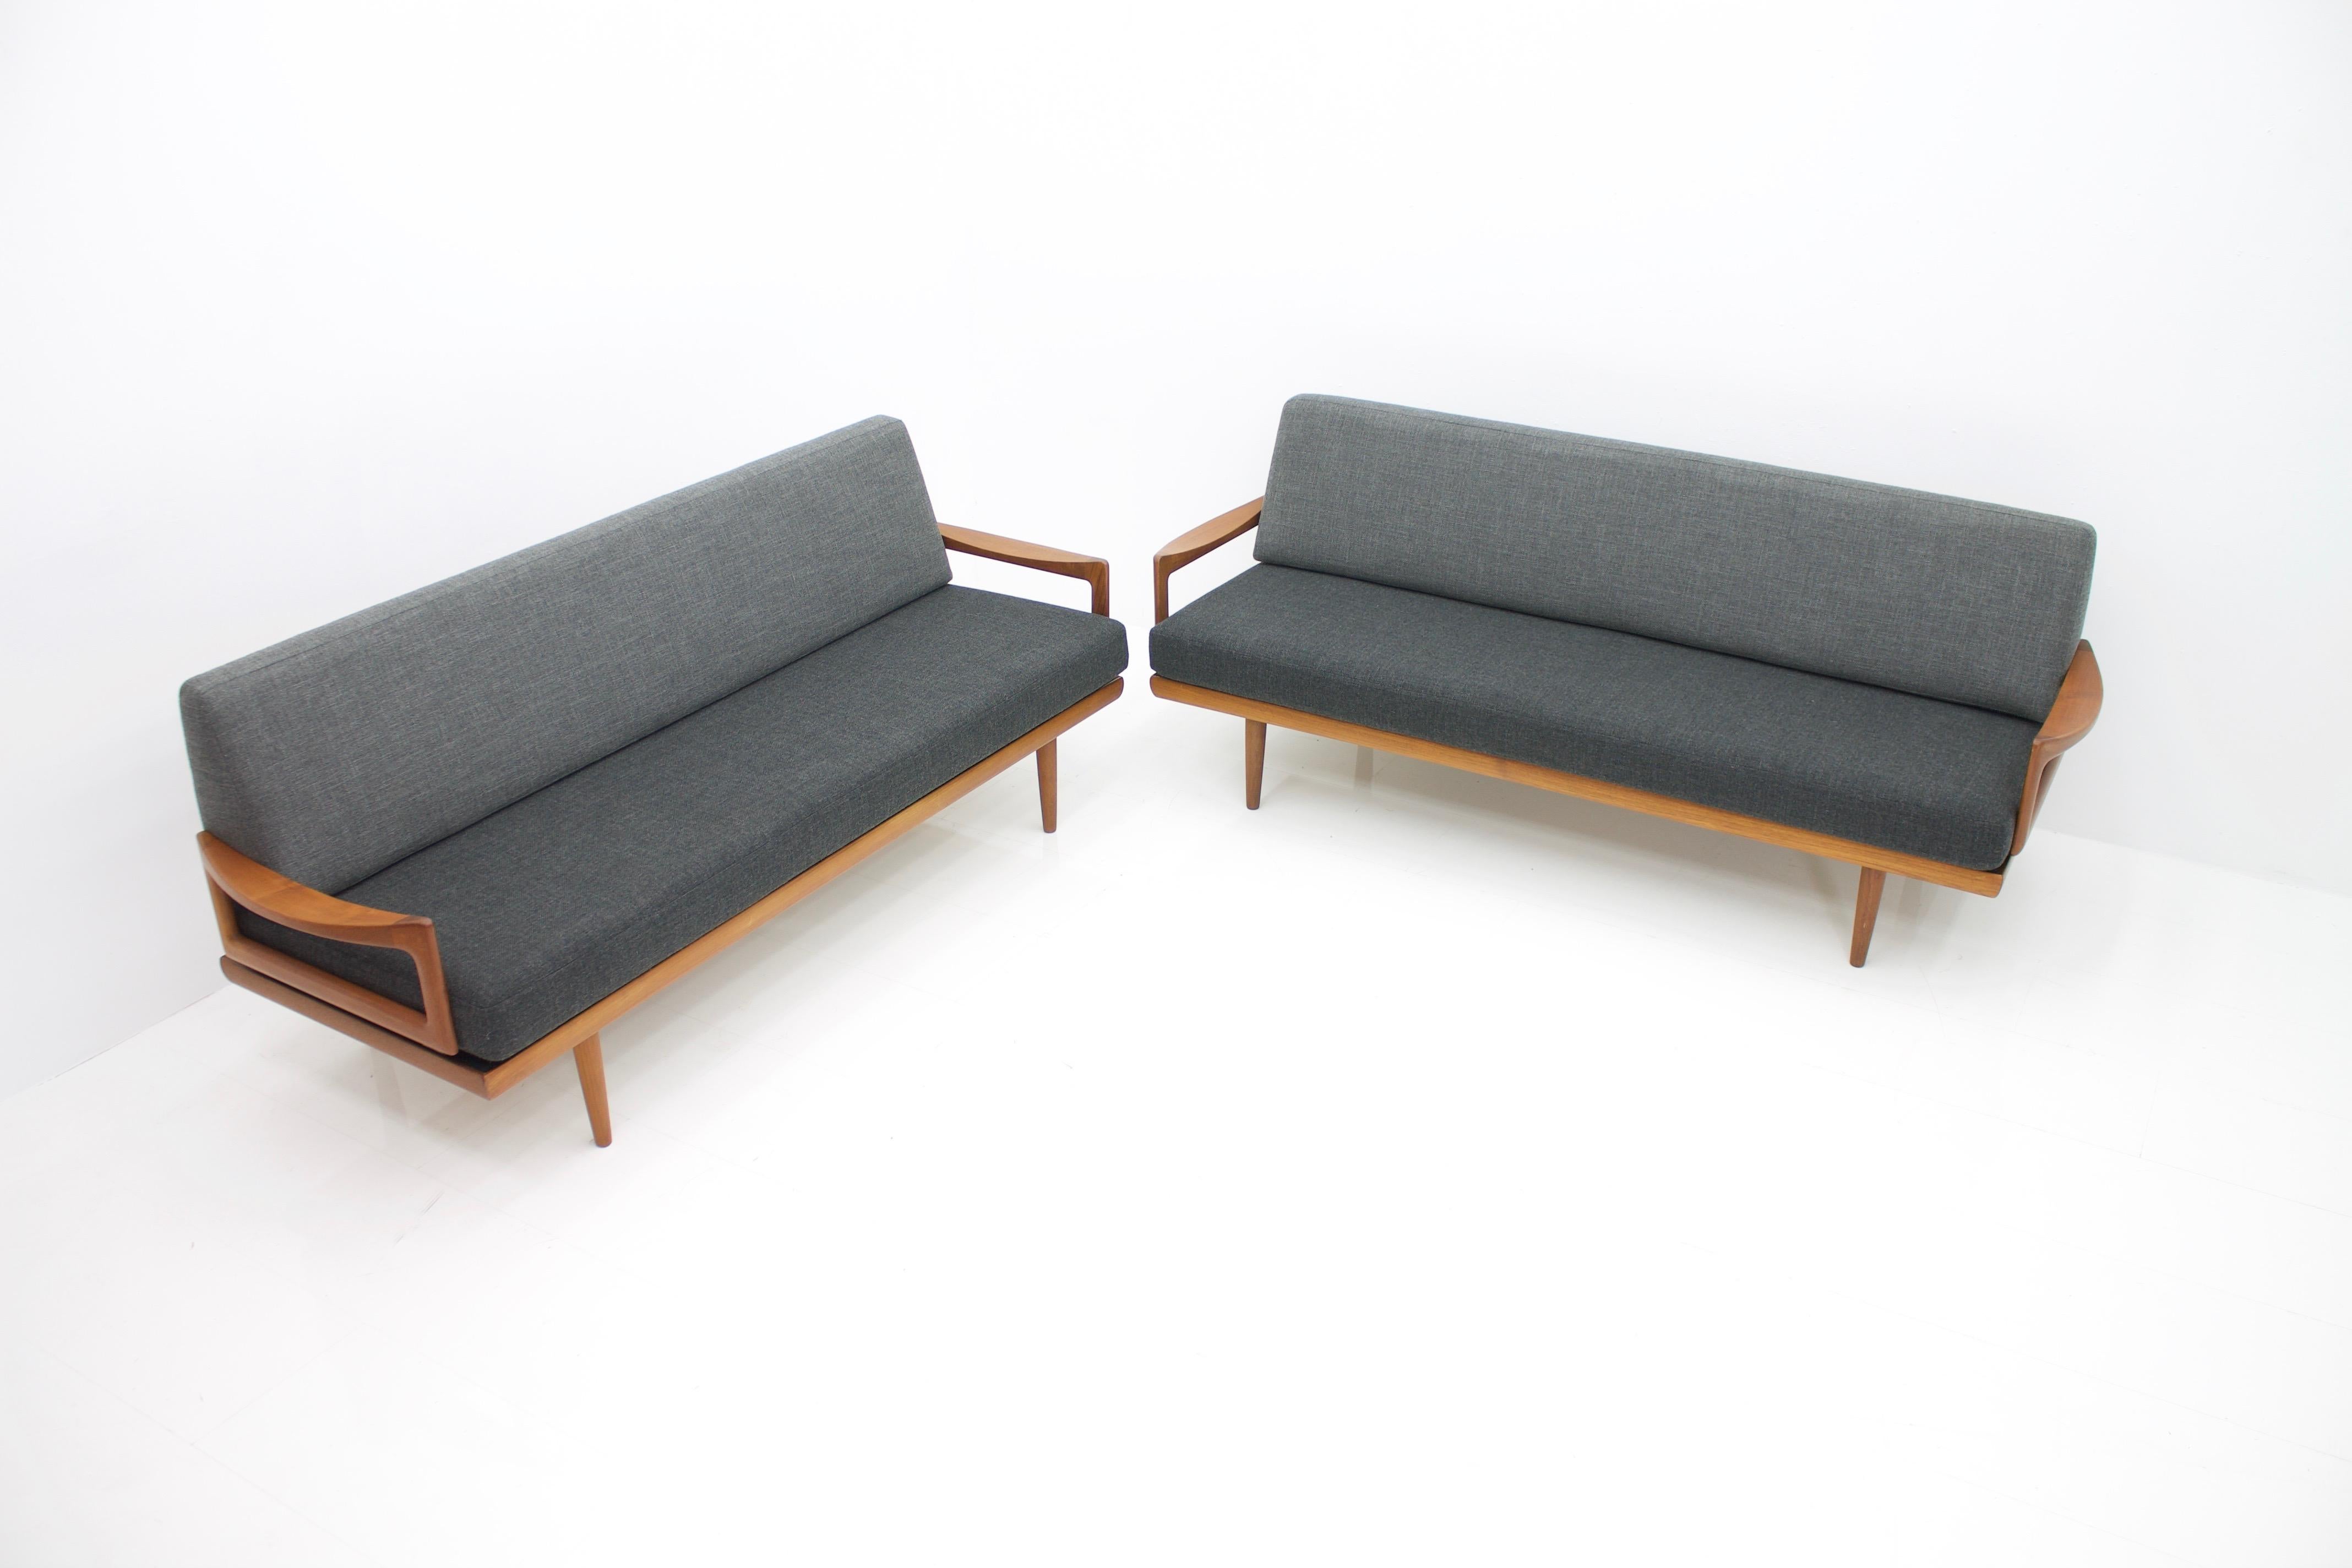 Tove & Edvard Kindt-Larsen Sofa Daybed Bench by Gustav Bahus Norway, 1960s (Skandinavische Moderne)